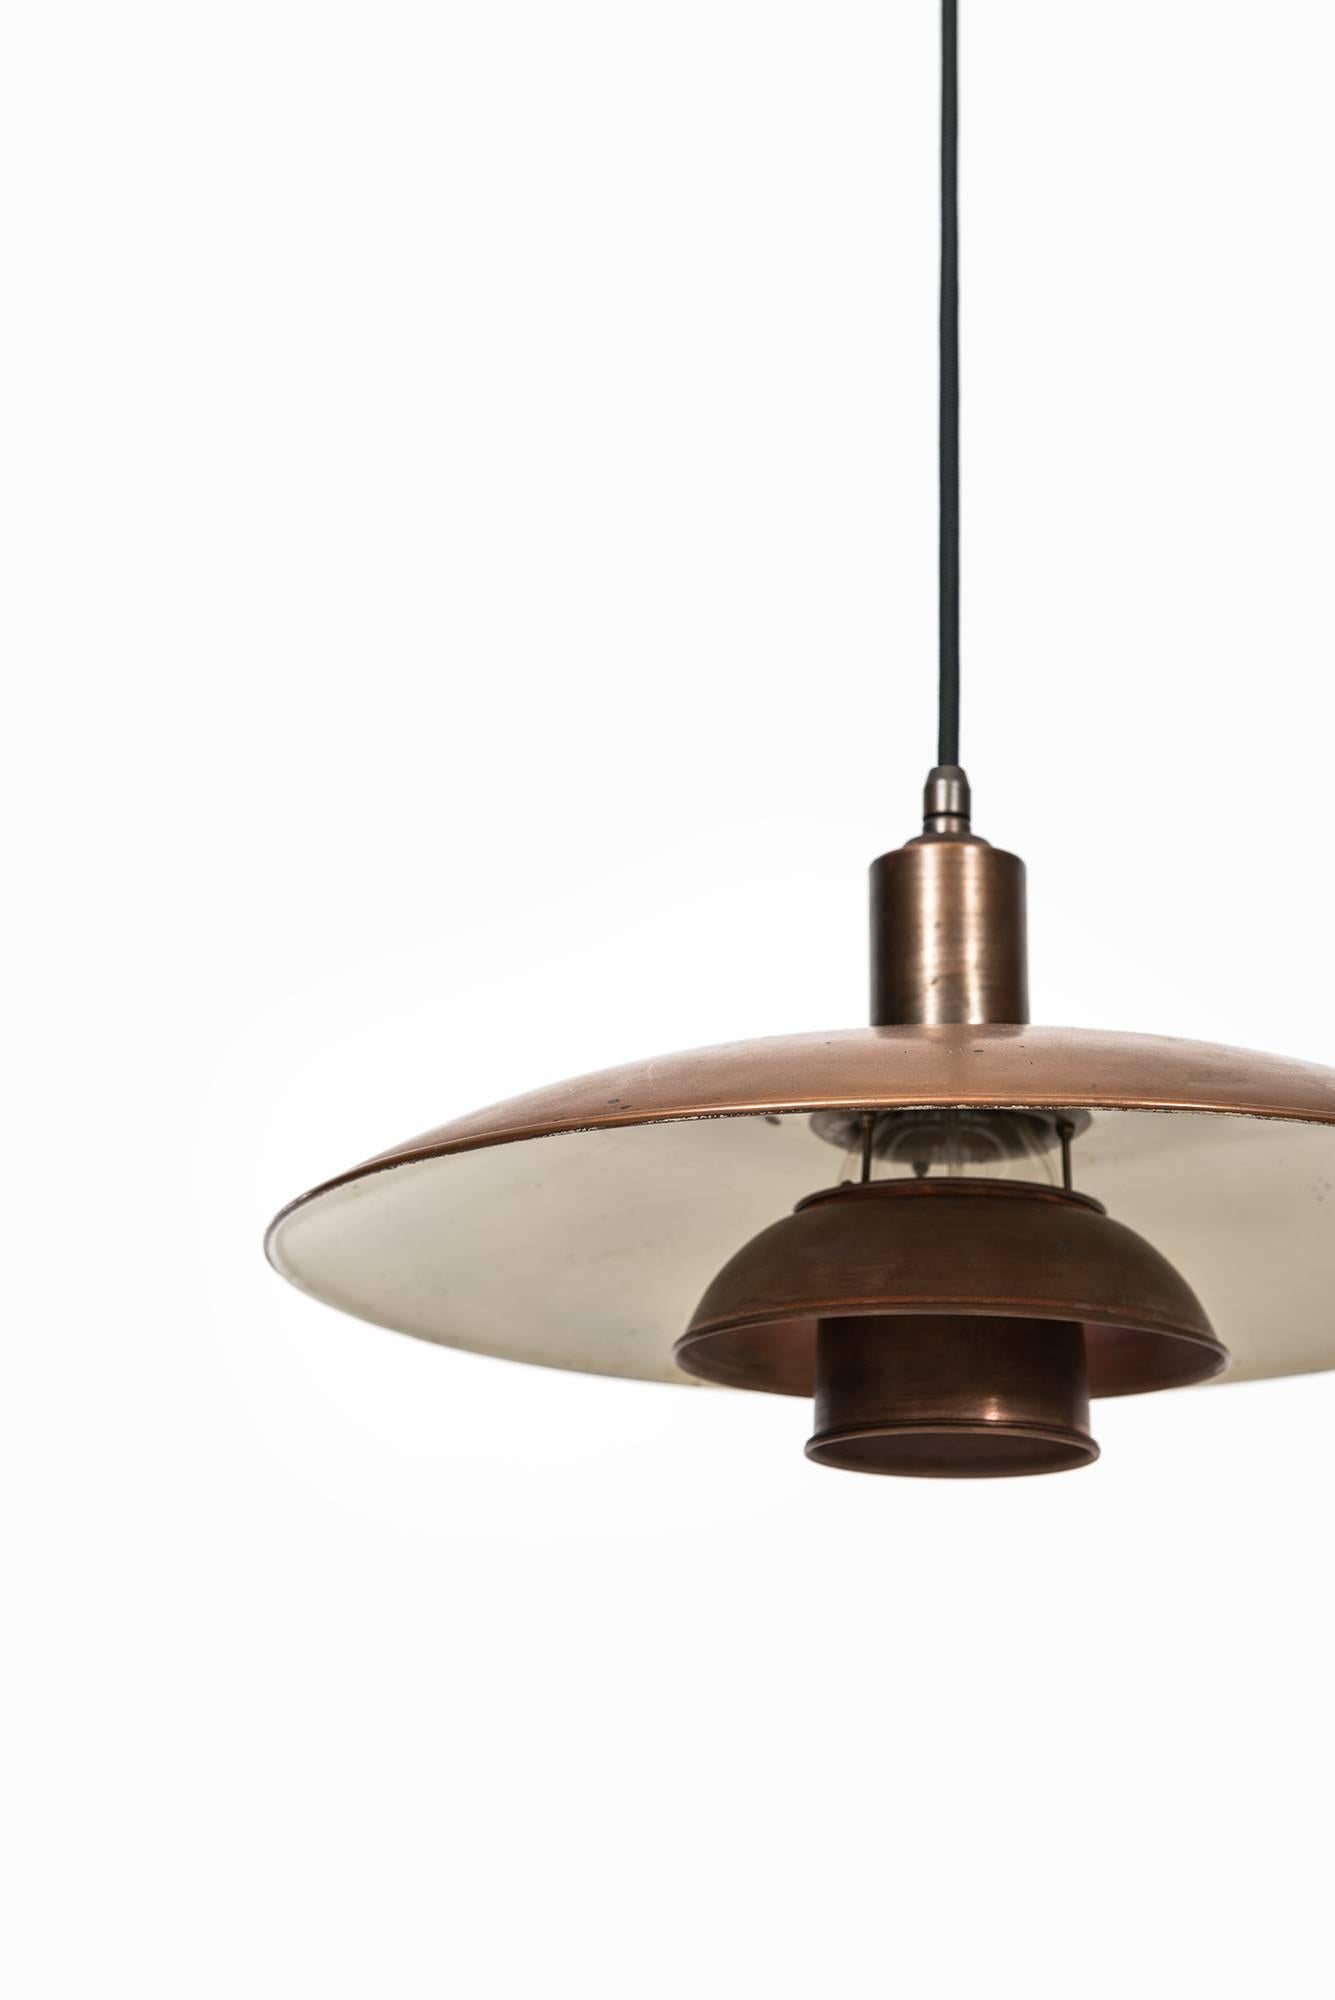 Rare ceiling lamp model PH-2 designed by Poul Henningsen. Produced by Louis Poulsen in Denmark.